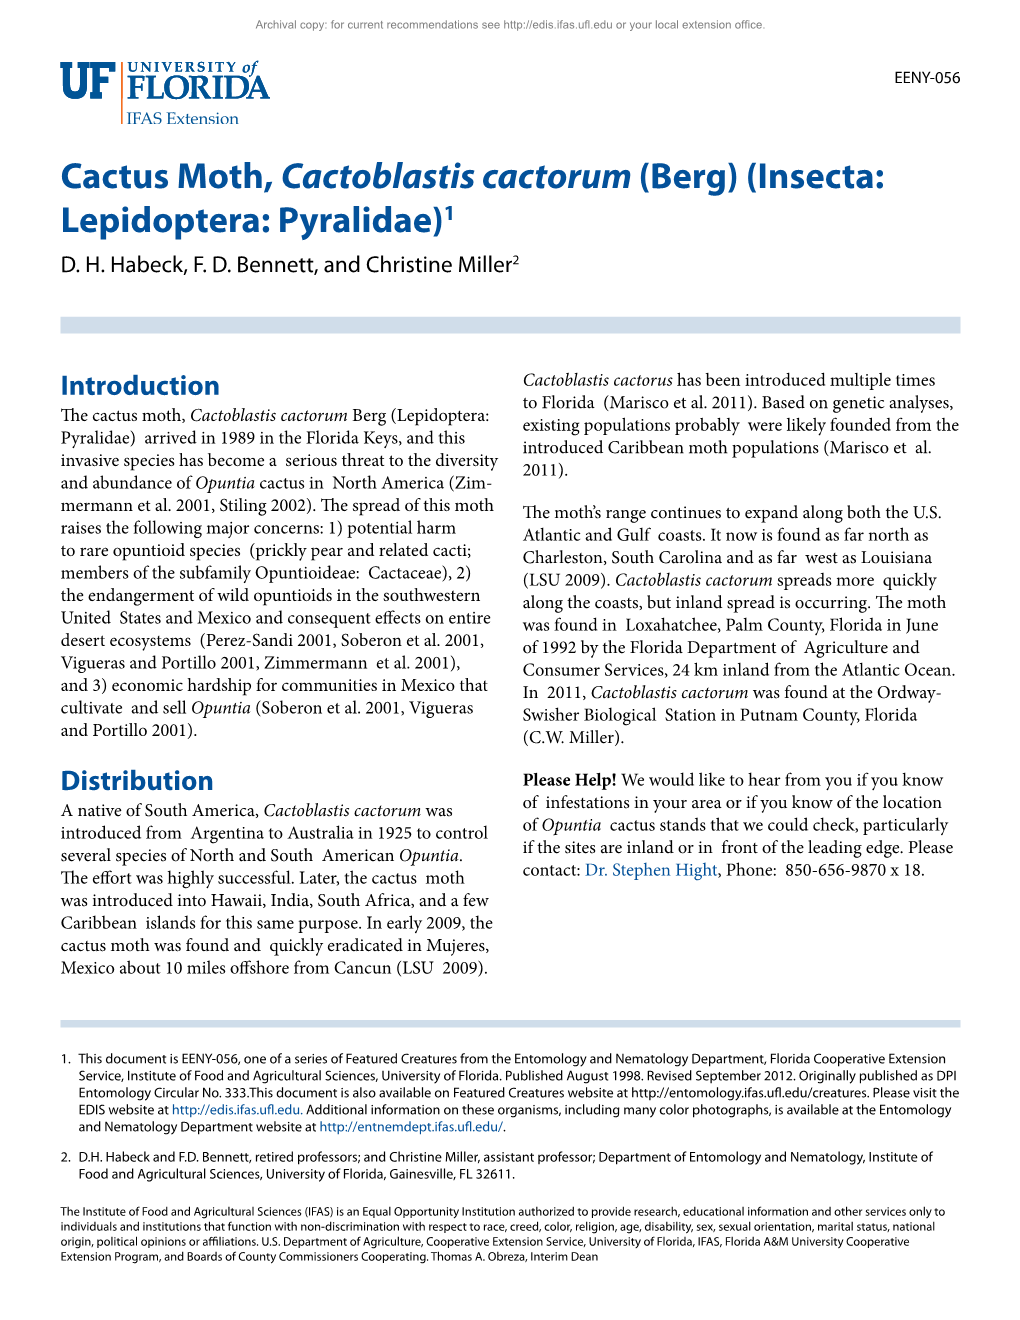 Cactus Moth, Cactoblastis Cactorum (Berg) (Insecta: Lepidoptera: Pyralidae)1 D